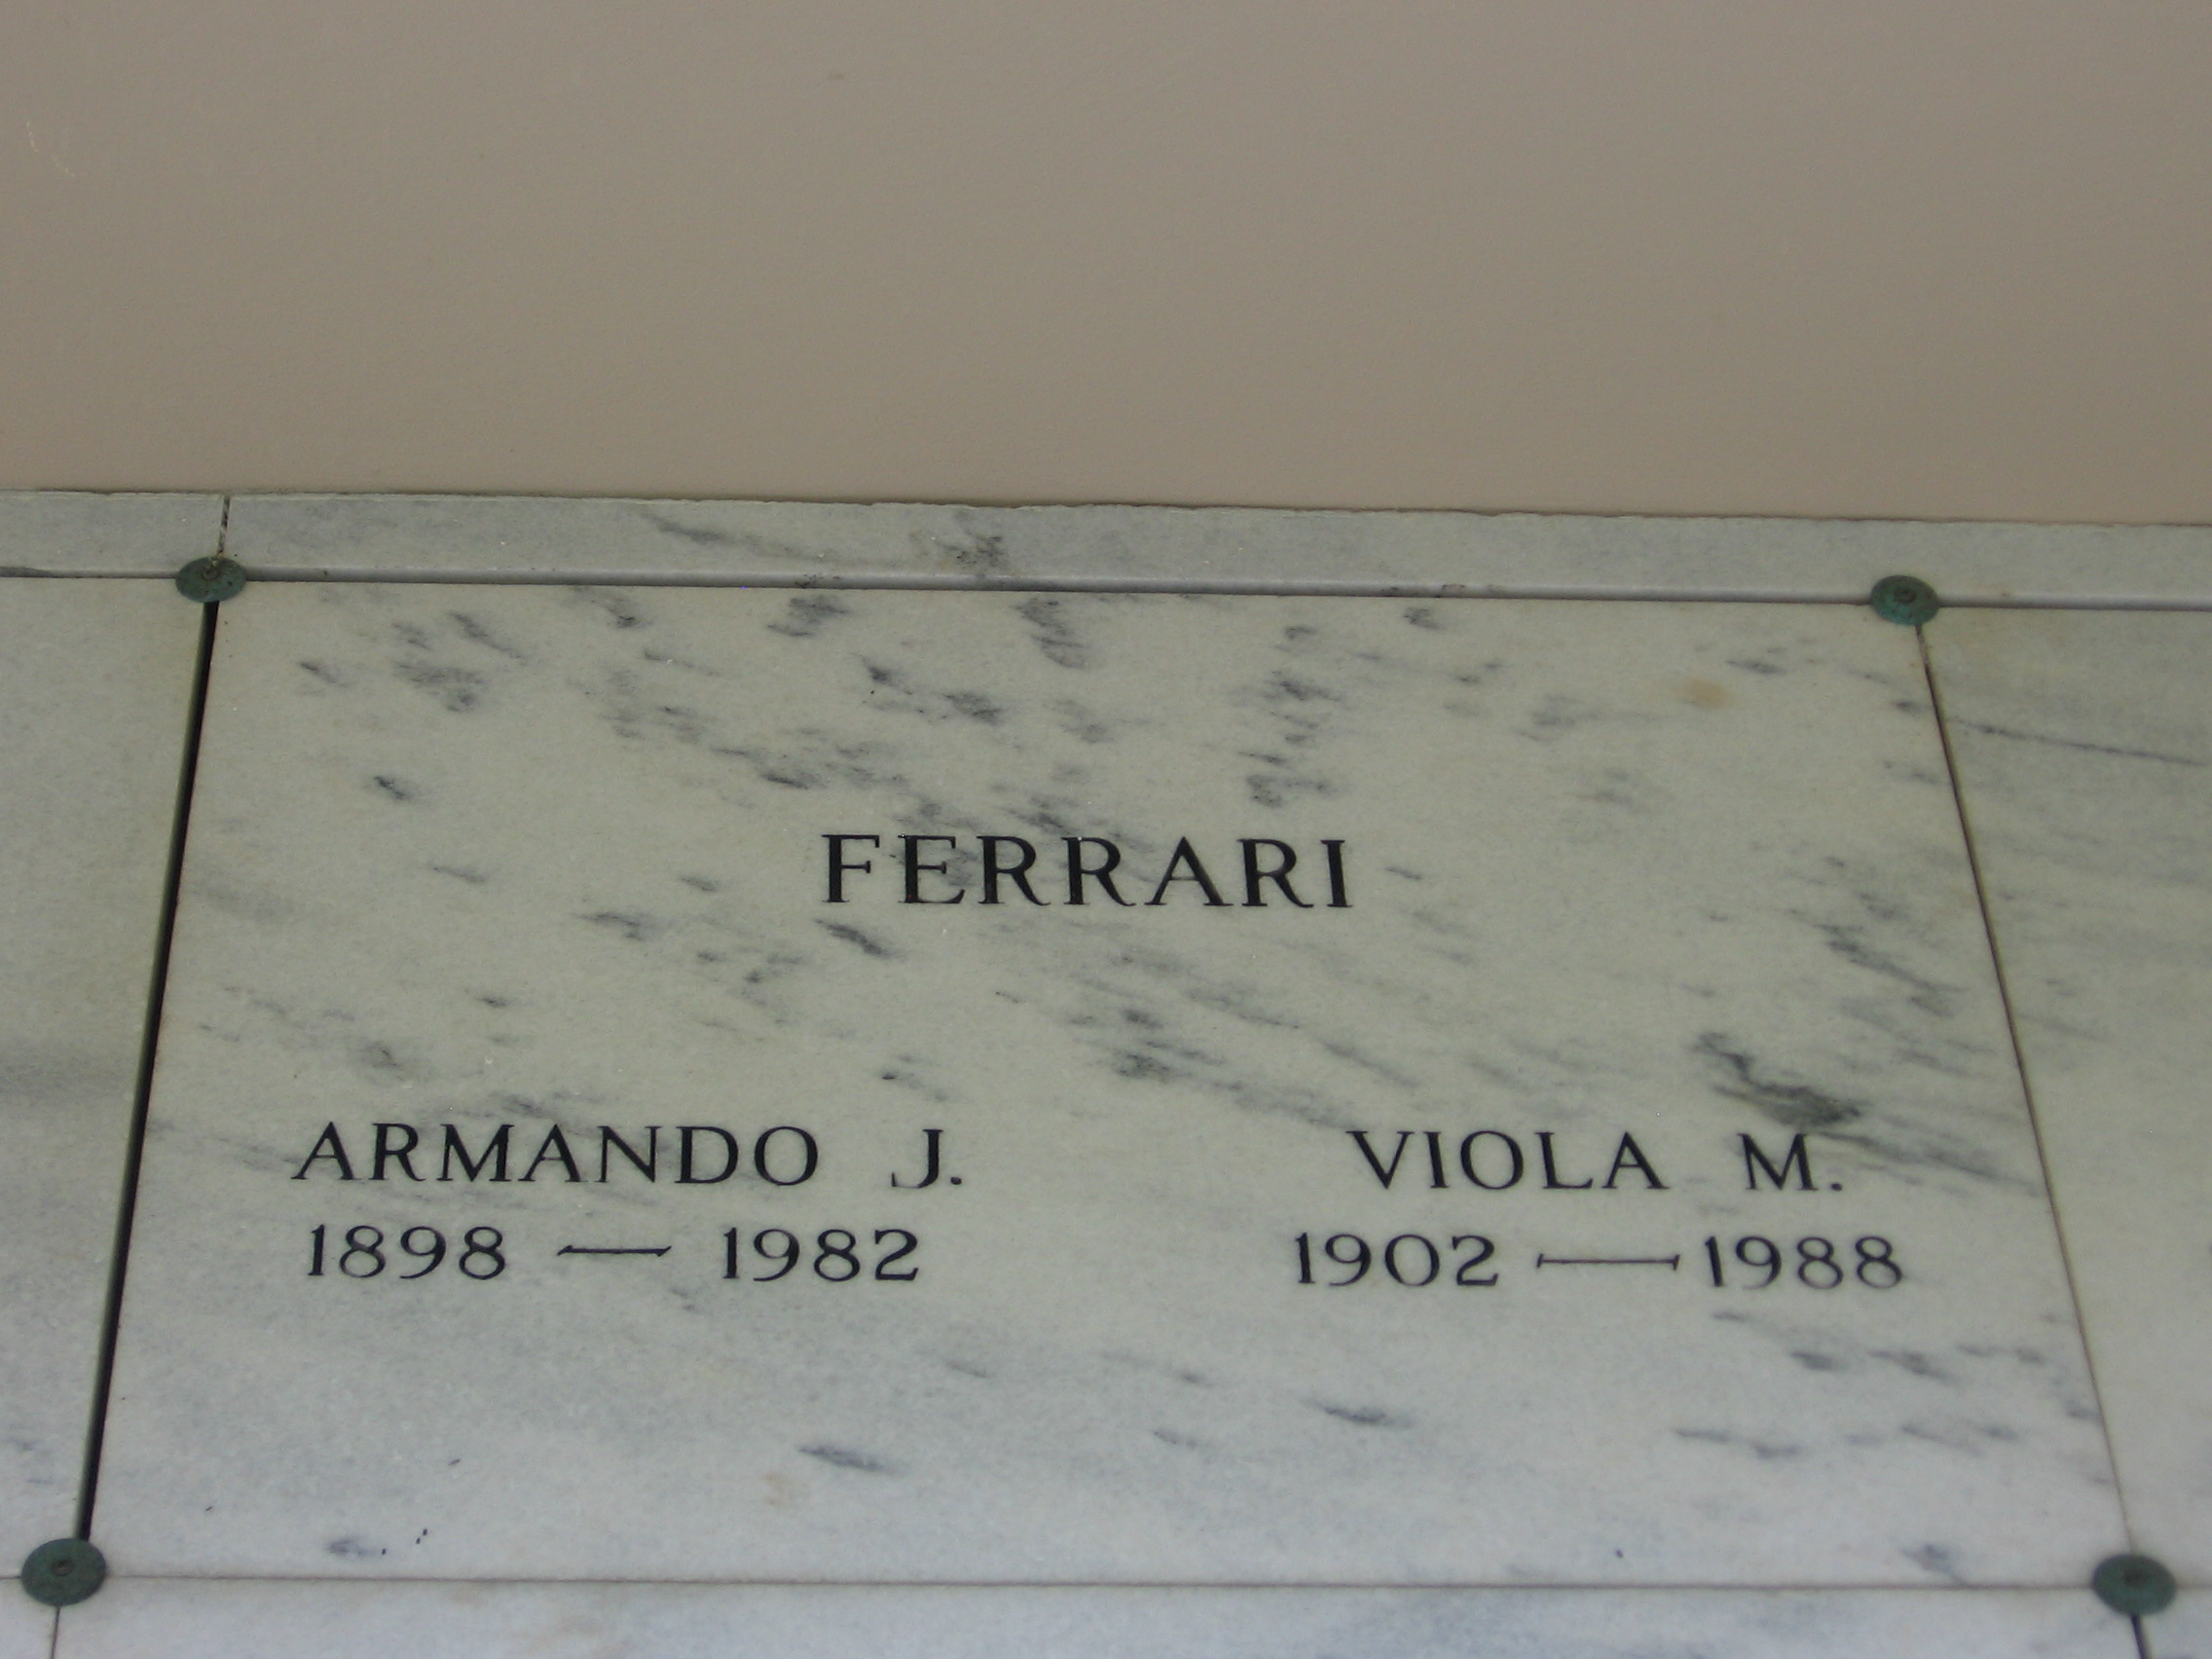 Viola M Ferrari